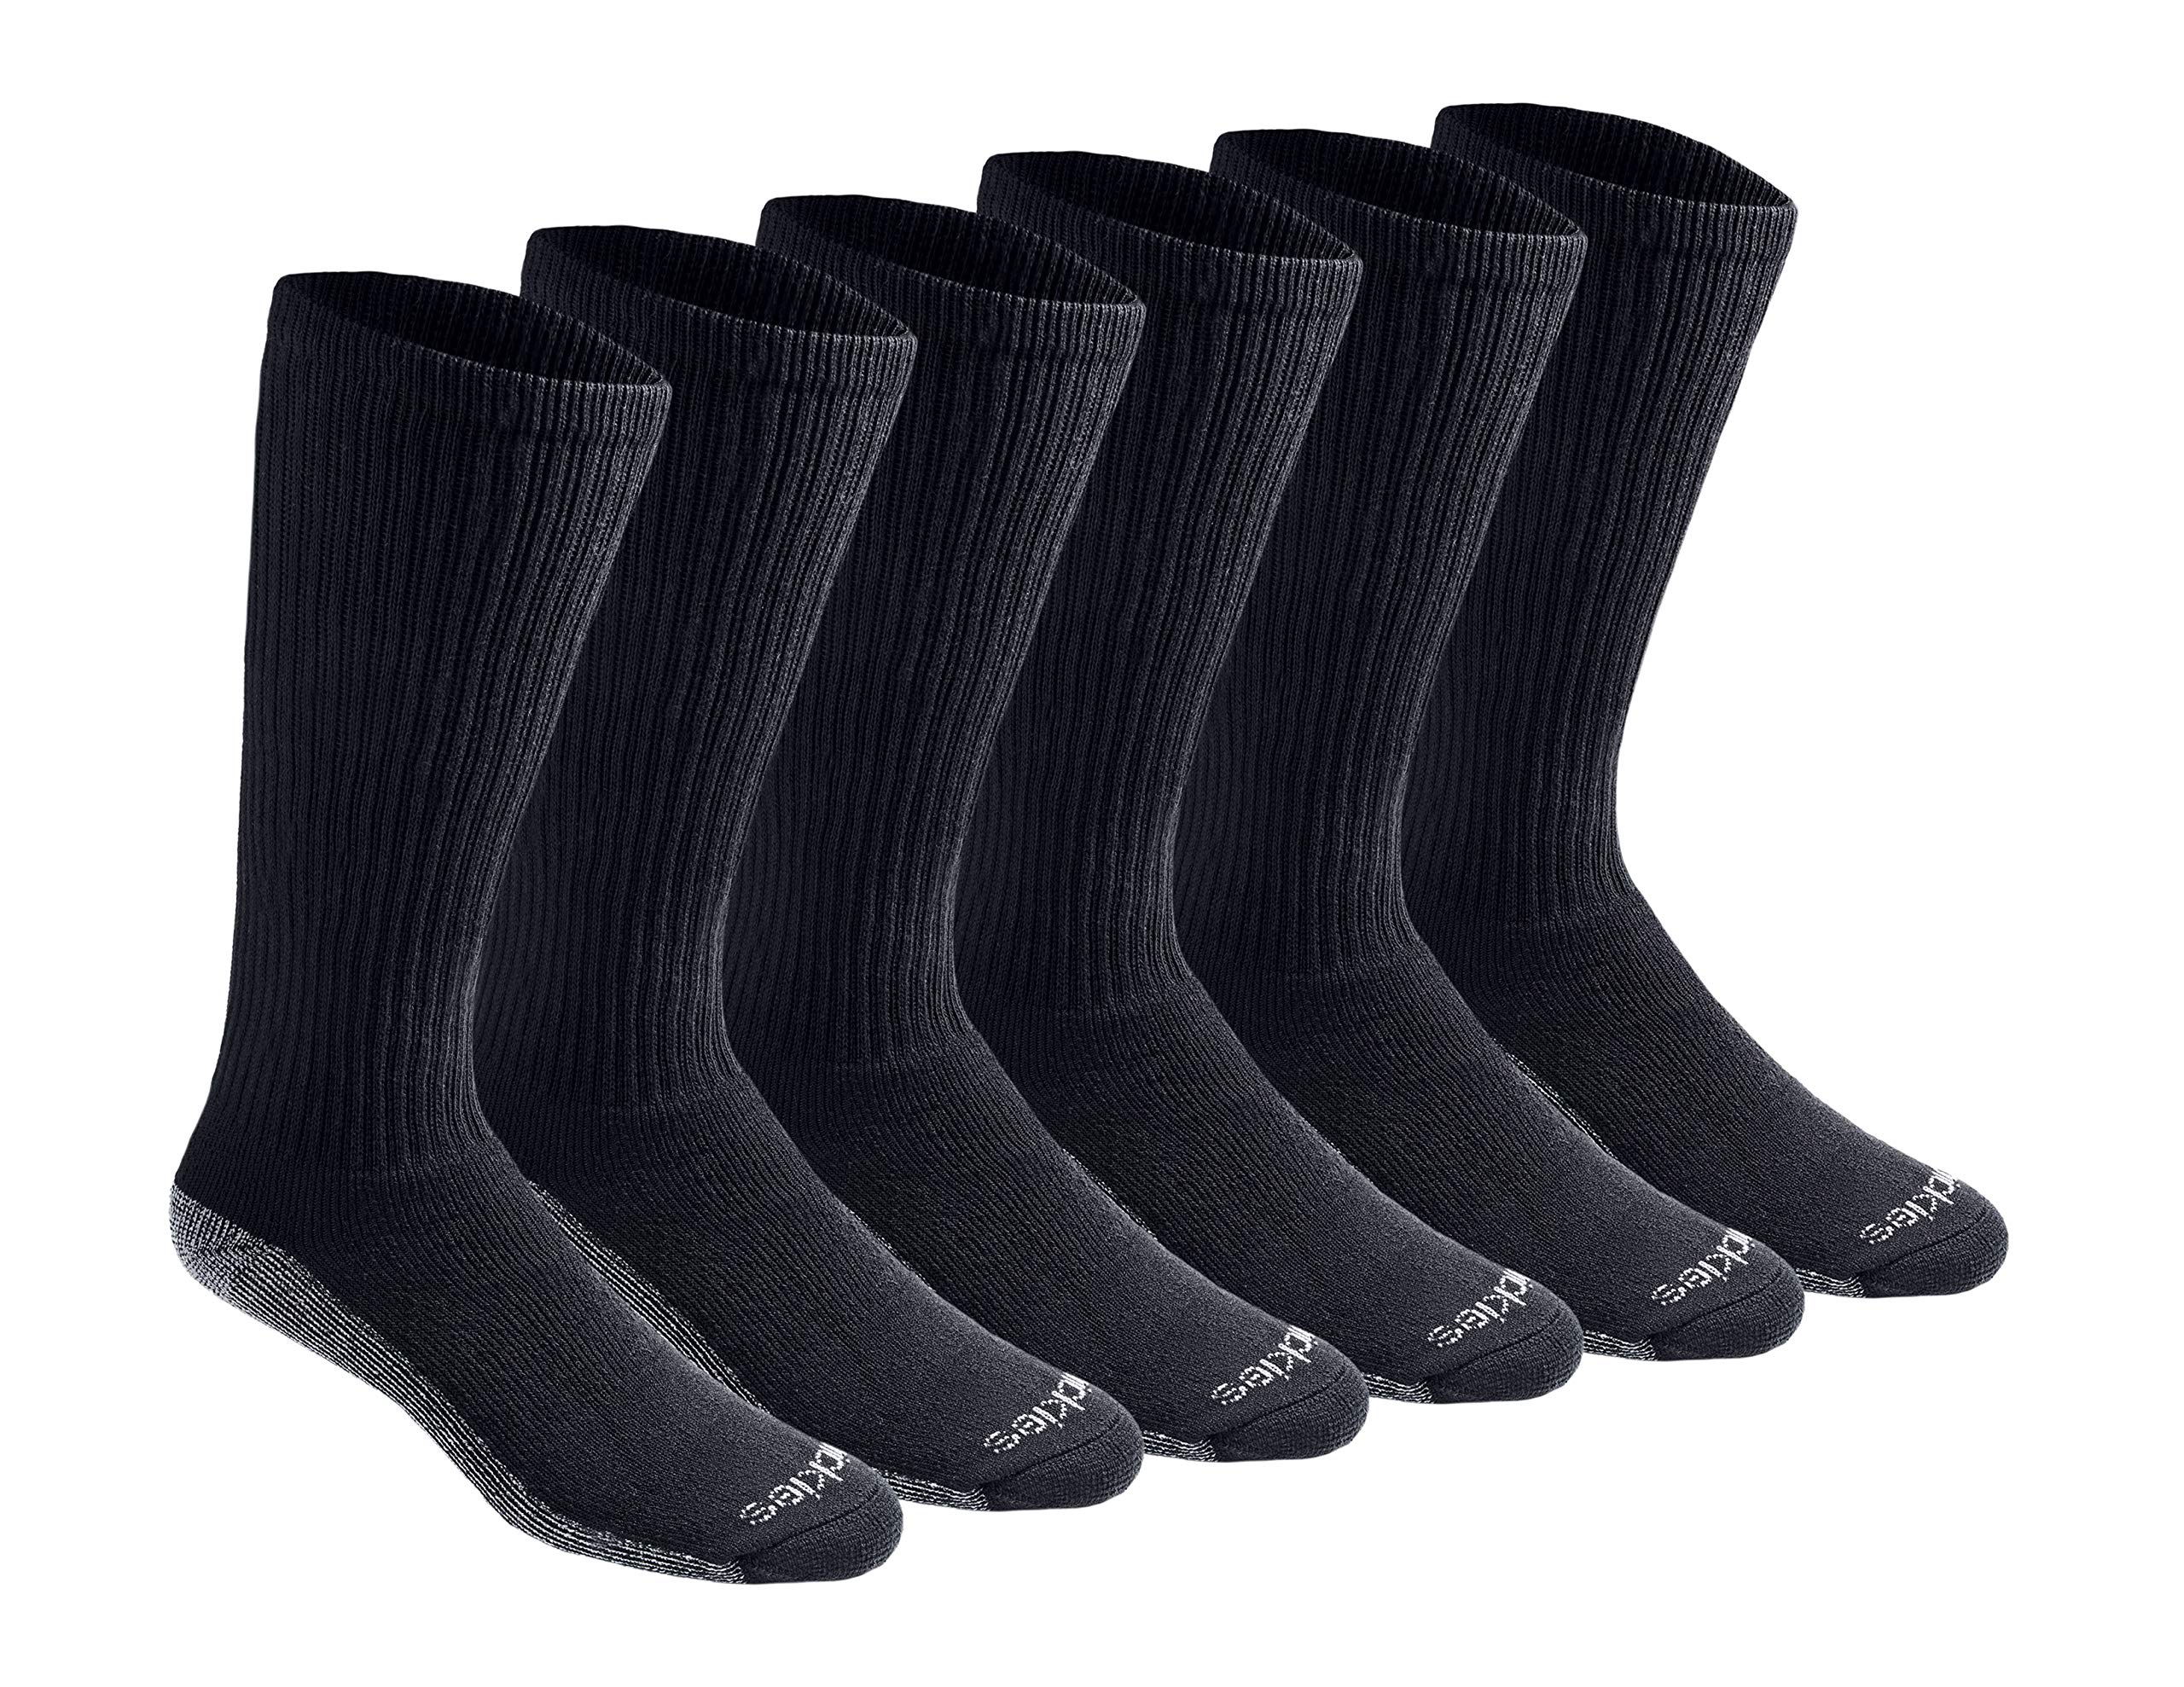 Dickies Men's Multi-Pack Dri-tech Moisture Control Boot-Length Socks, Black (6 Pairs), X-Large